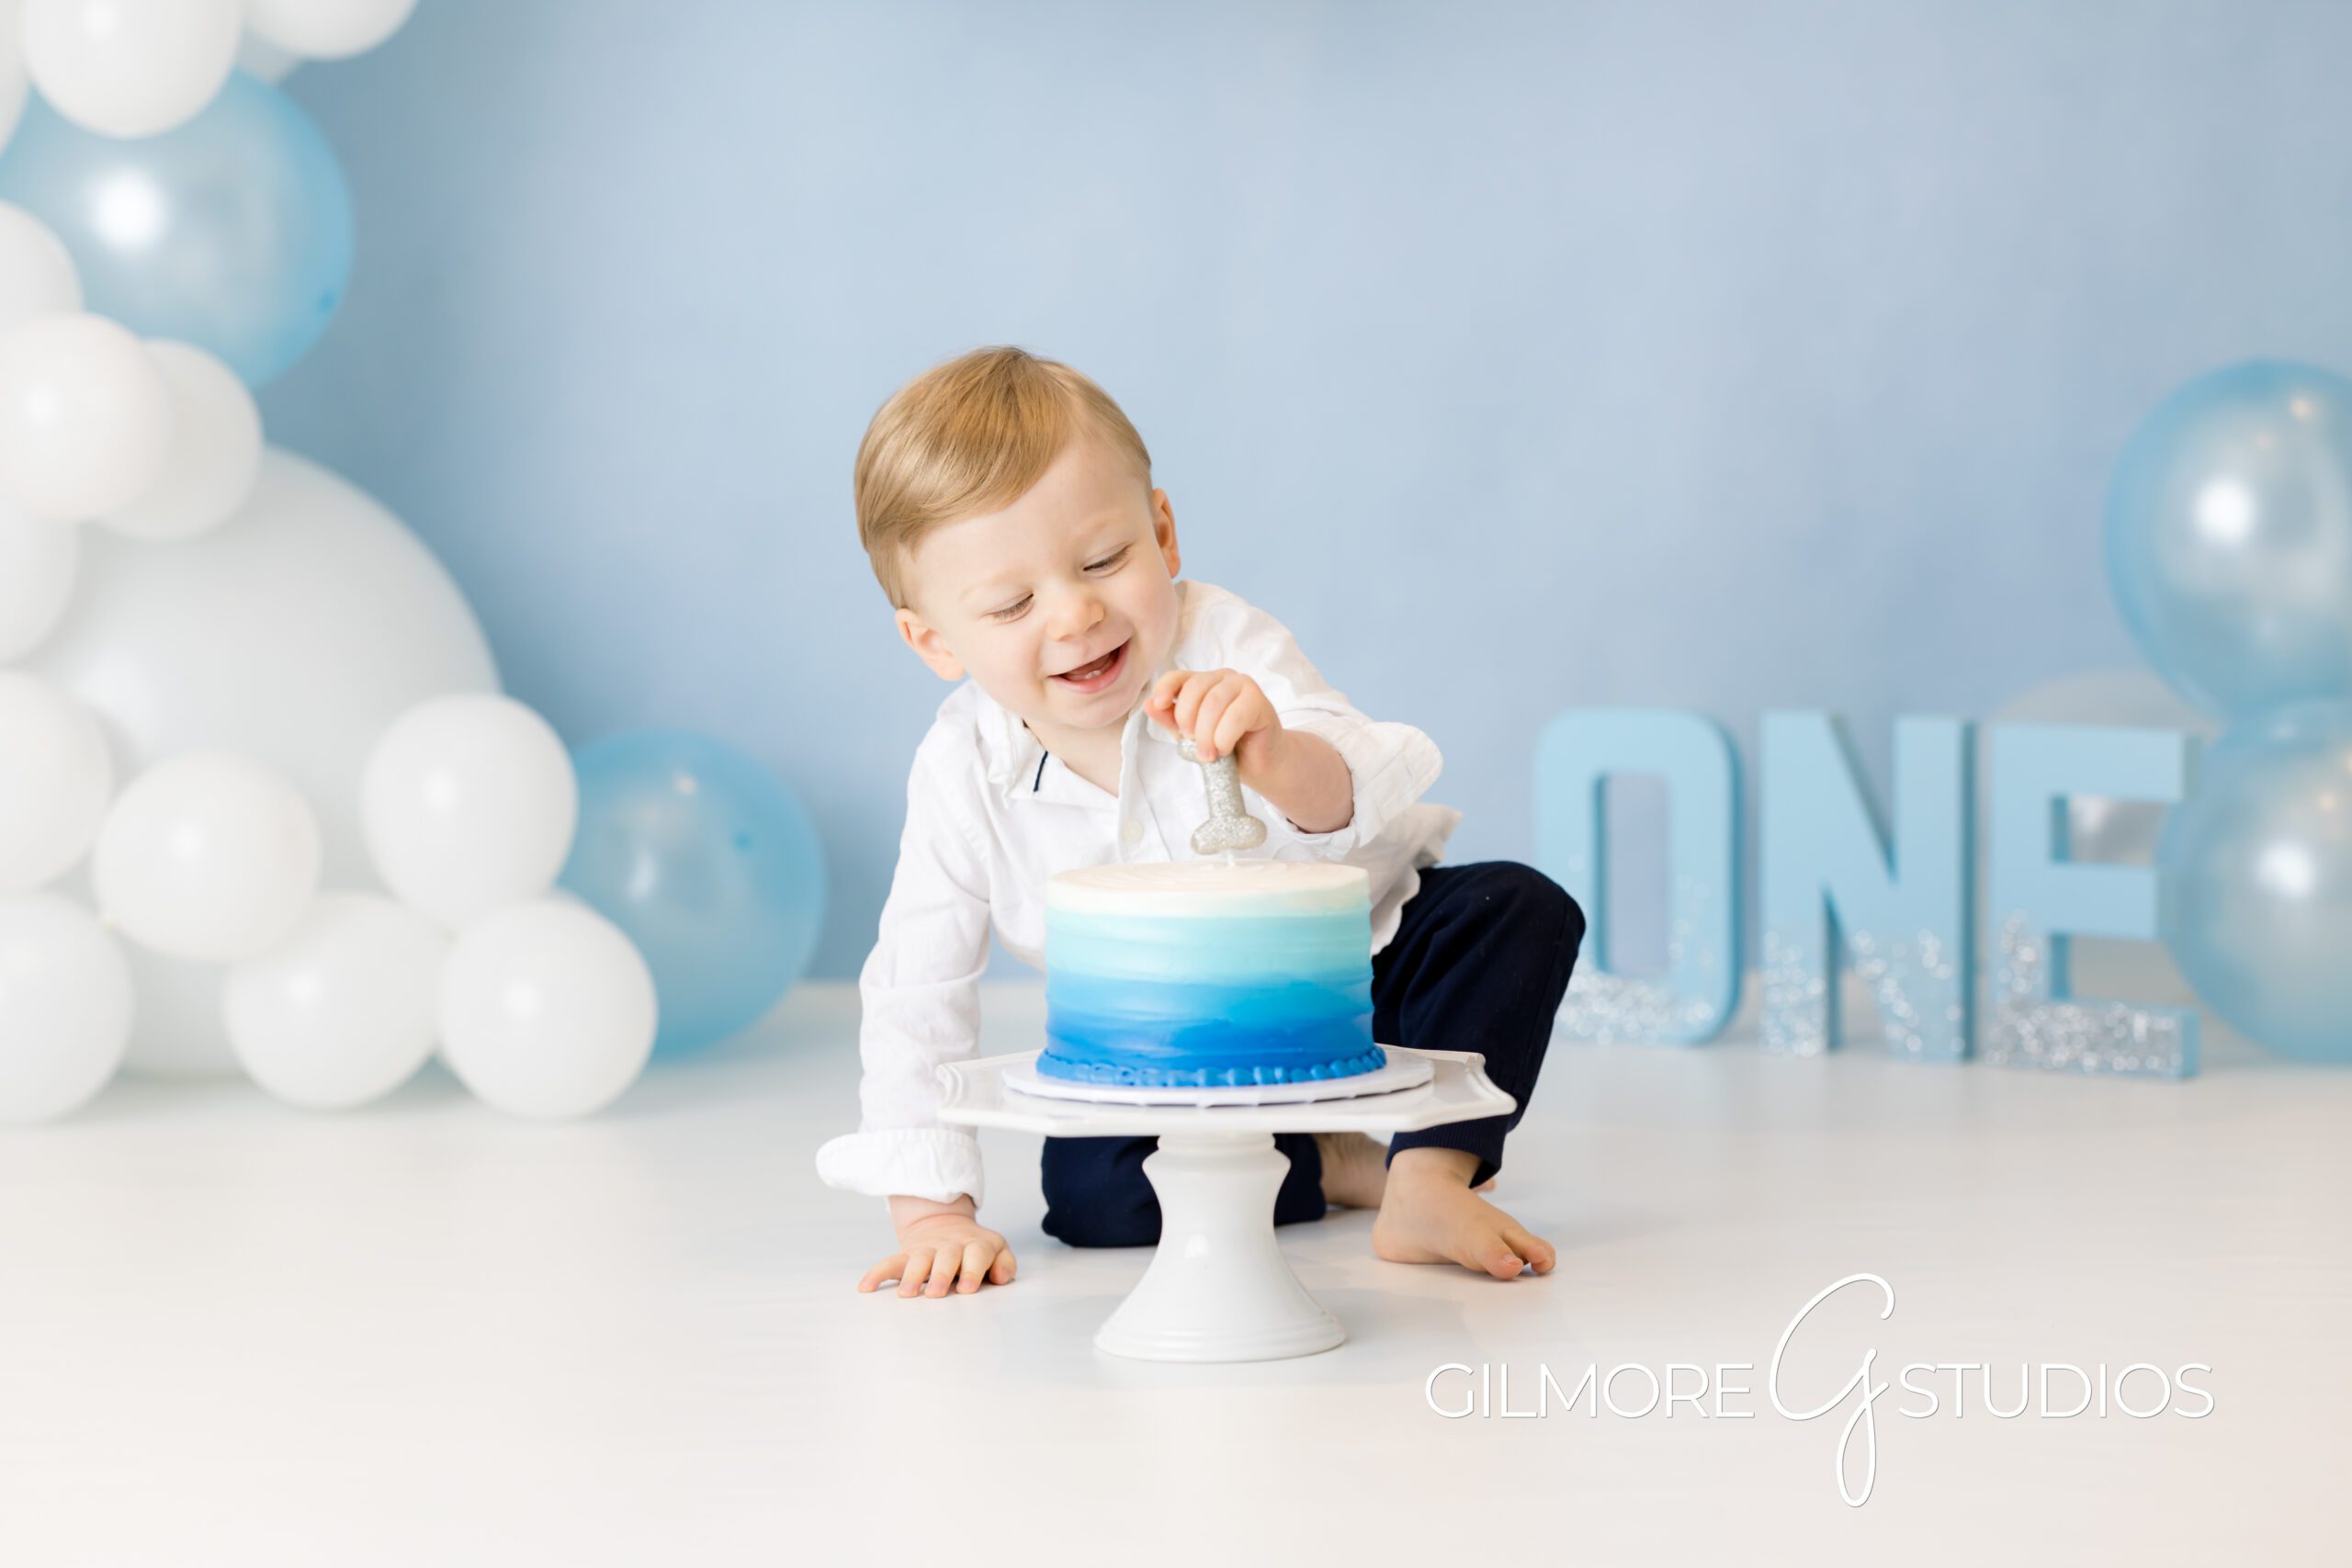 Simple 1st Birthday Cake Smash - Gilbert, AZ Photographer, baby on blue and white balloon background, brother, first birthday, cake smash photo shoot, Gilmore Studios, blue and white cake